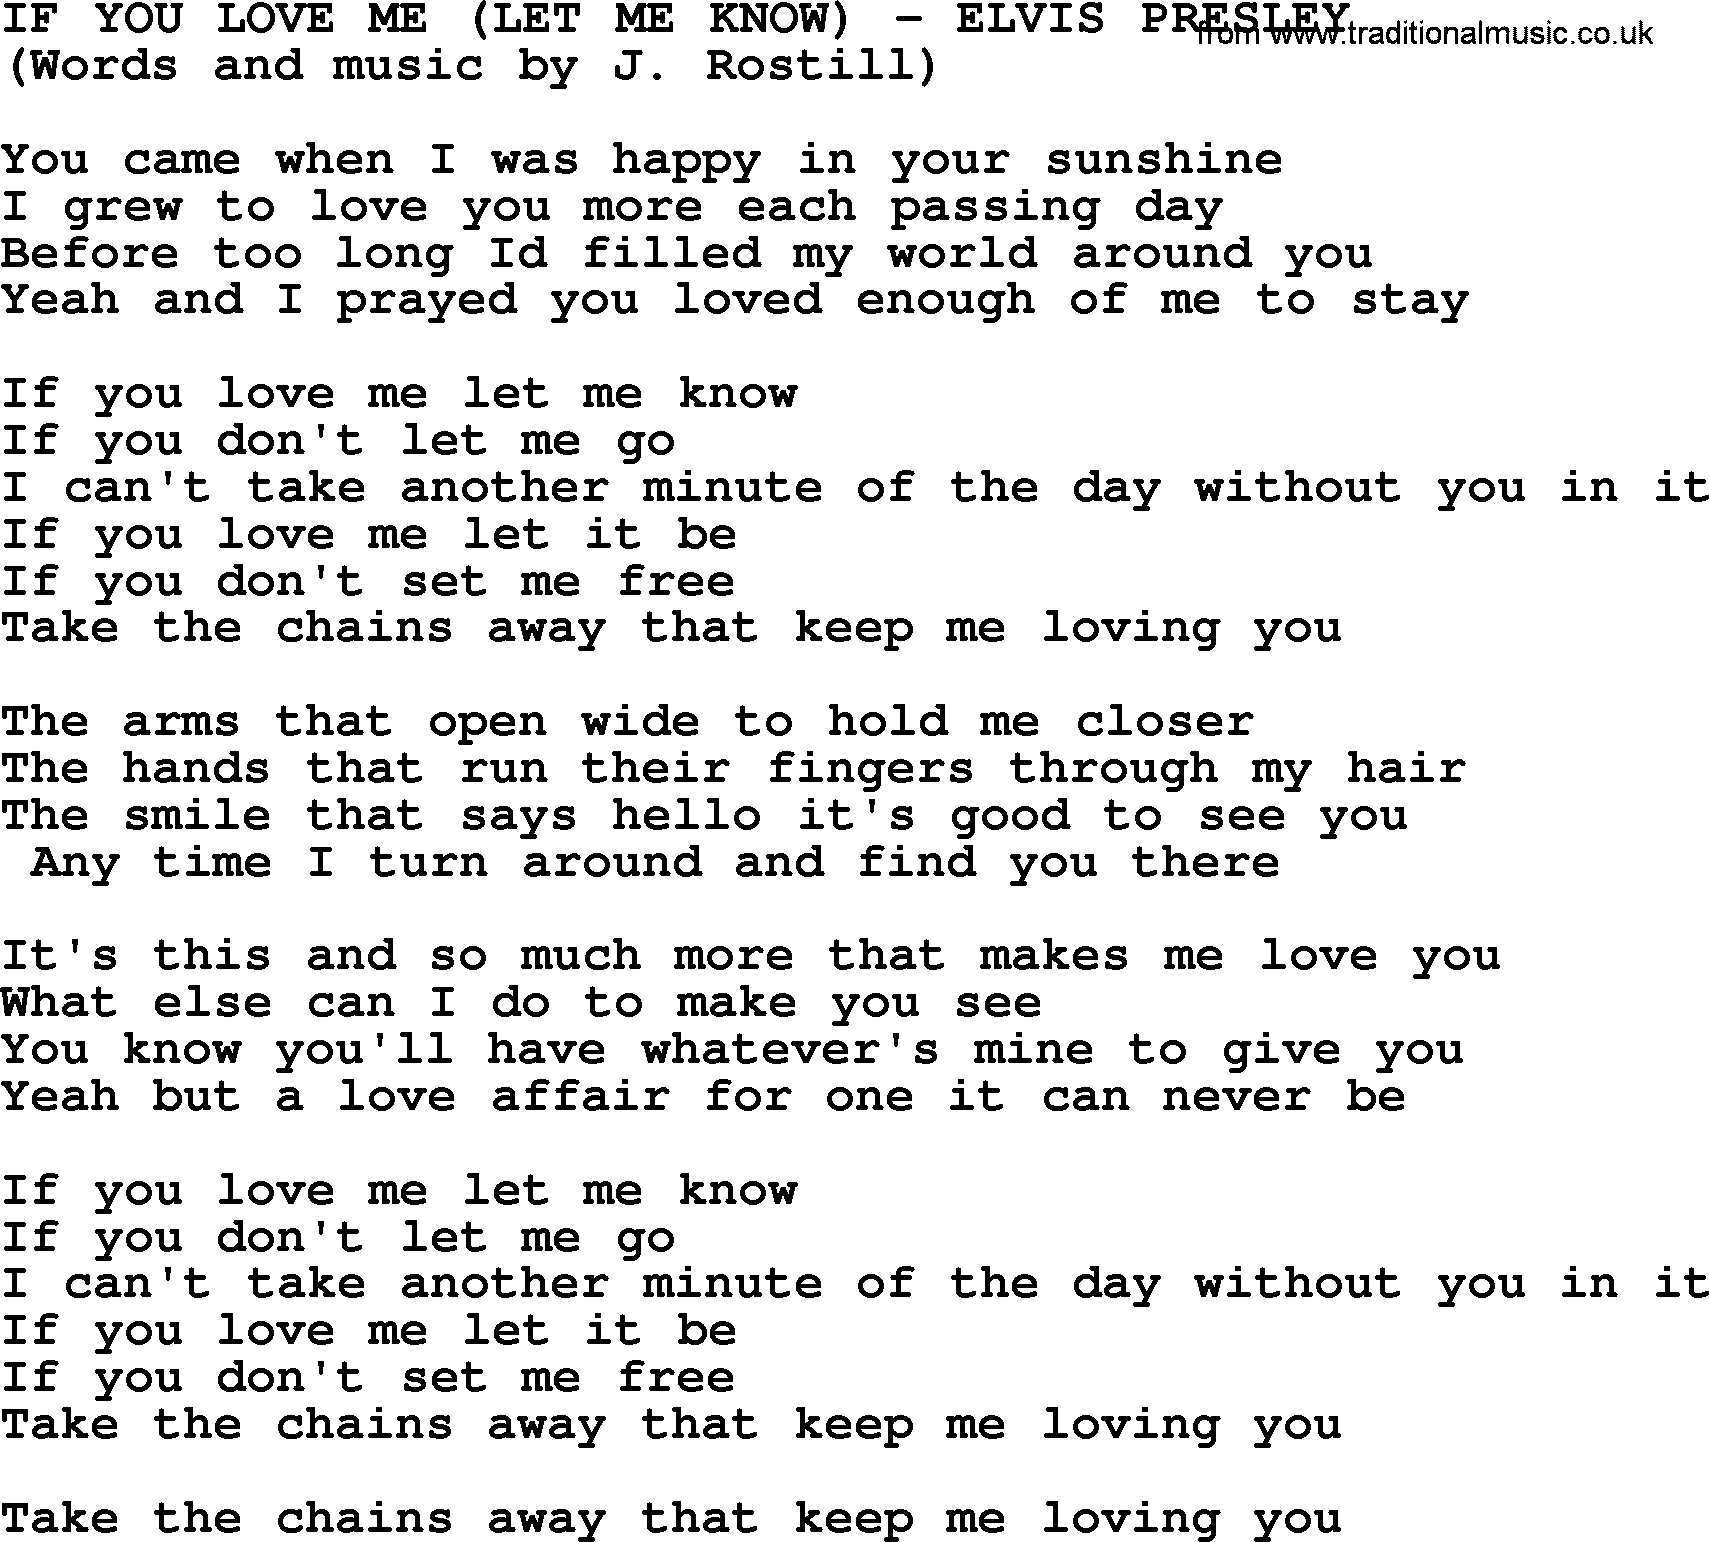 Elvis Presley song: If You Love Me (Let Me Know) lyrics